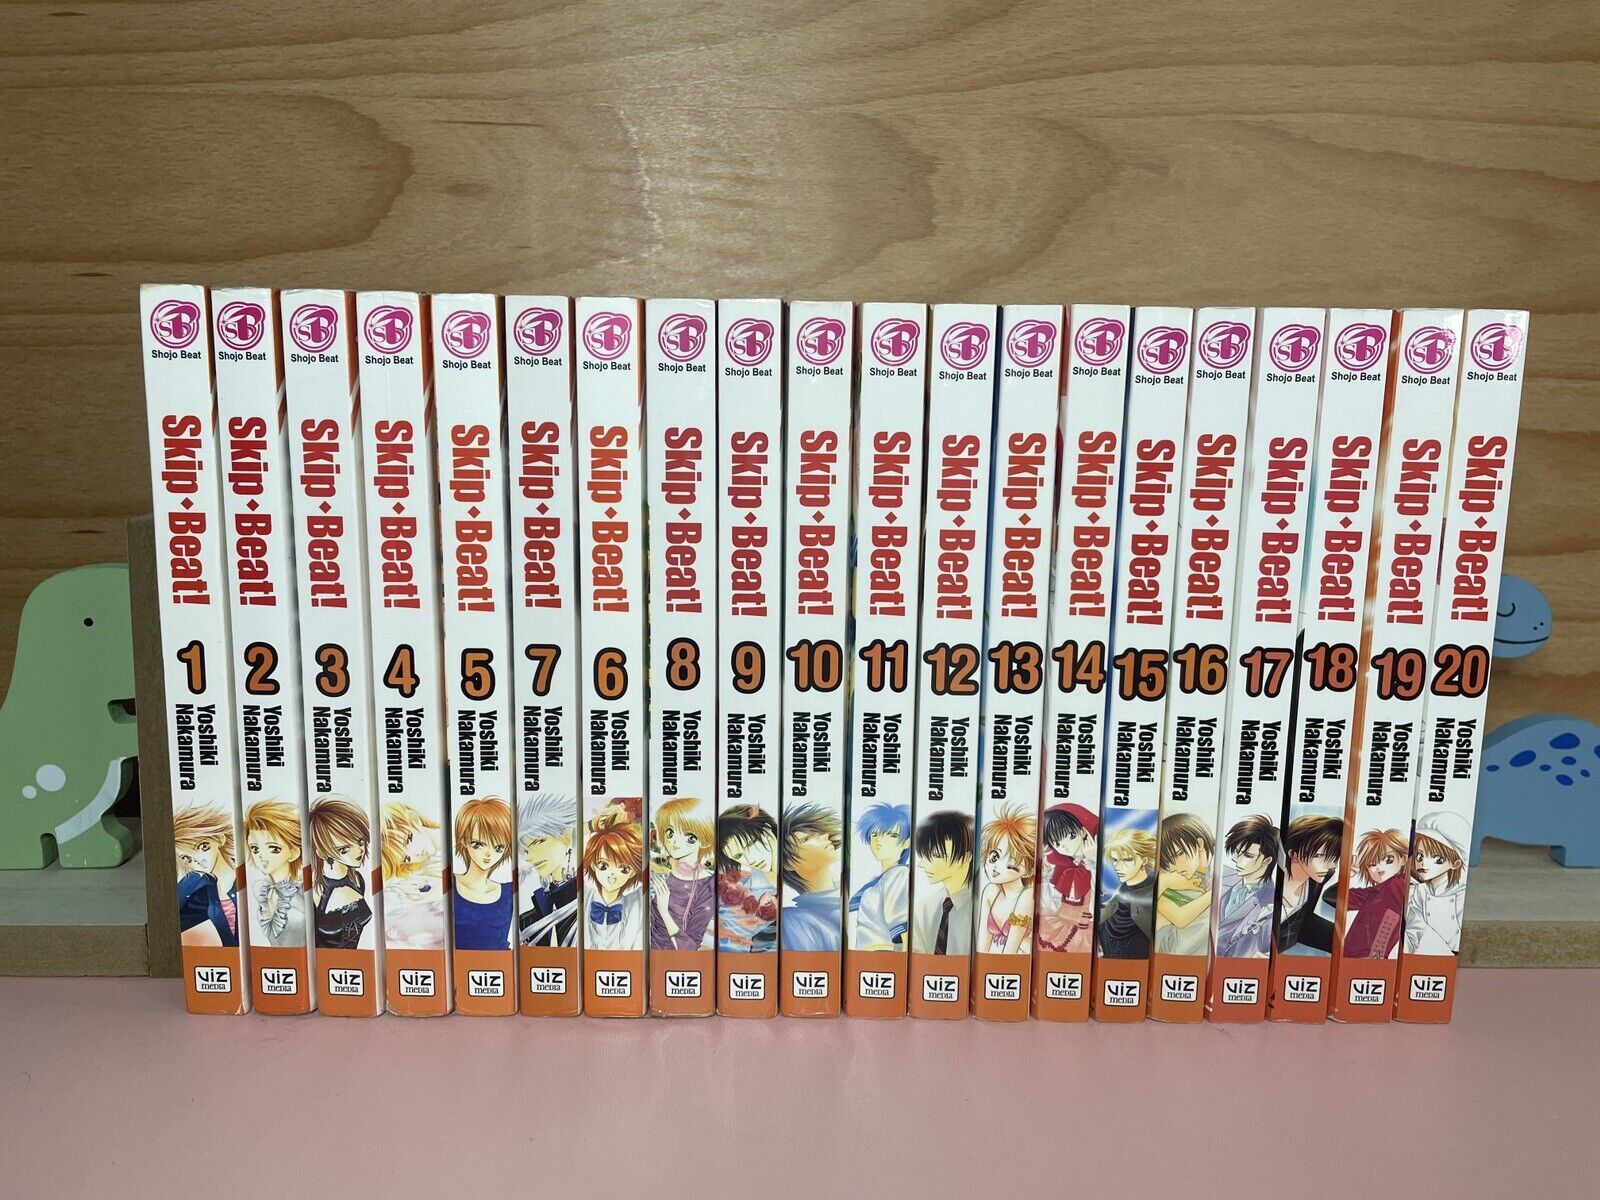 Skip Beat By Yoshiki Nakamura - Shojo Beat English Manga Lot Volumes 1 - 20